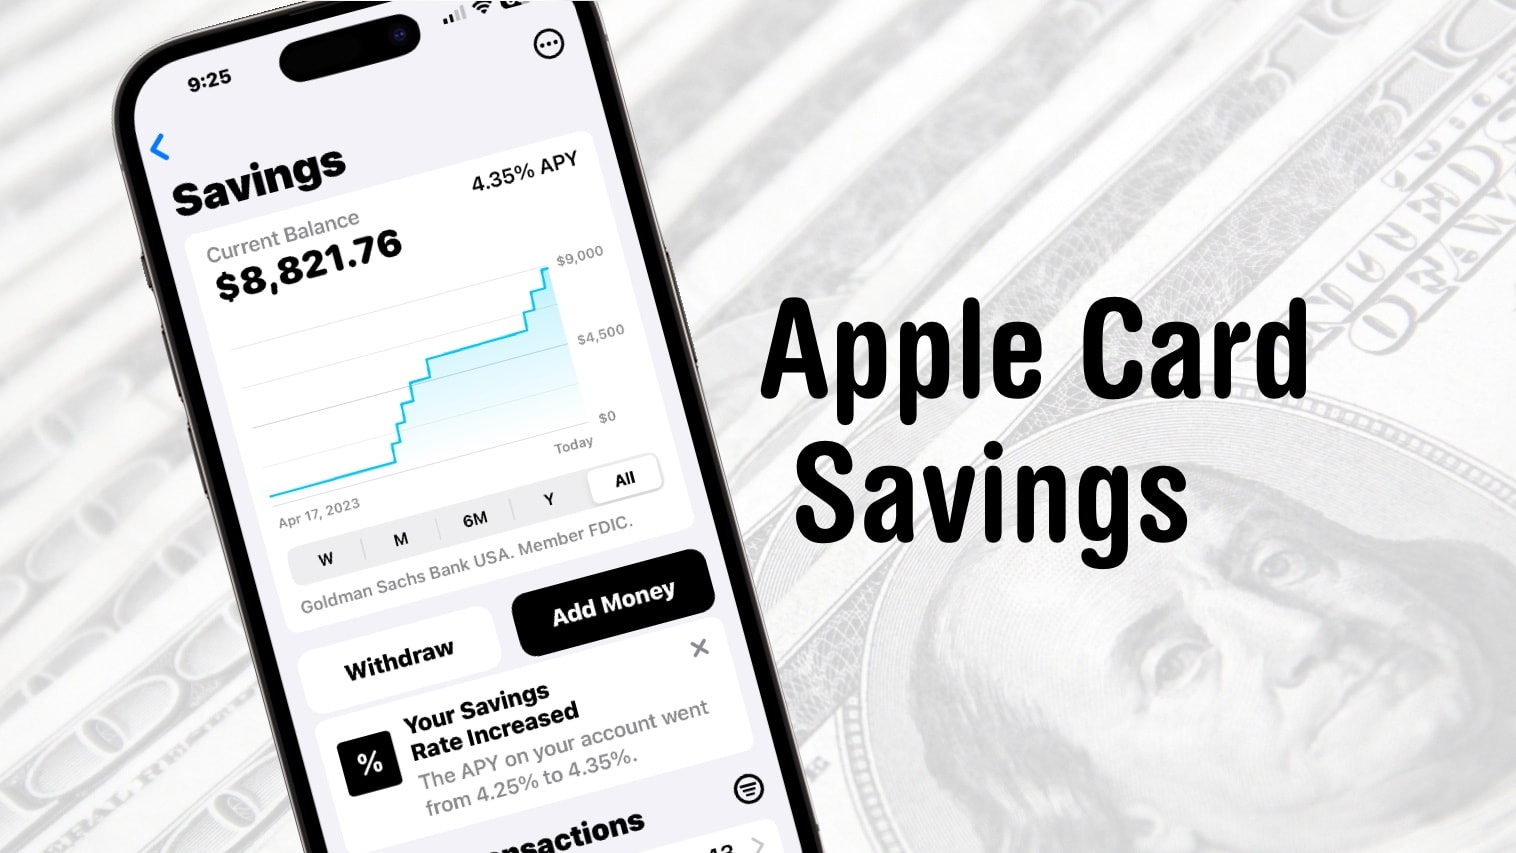 Apple Card Savings account